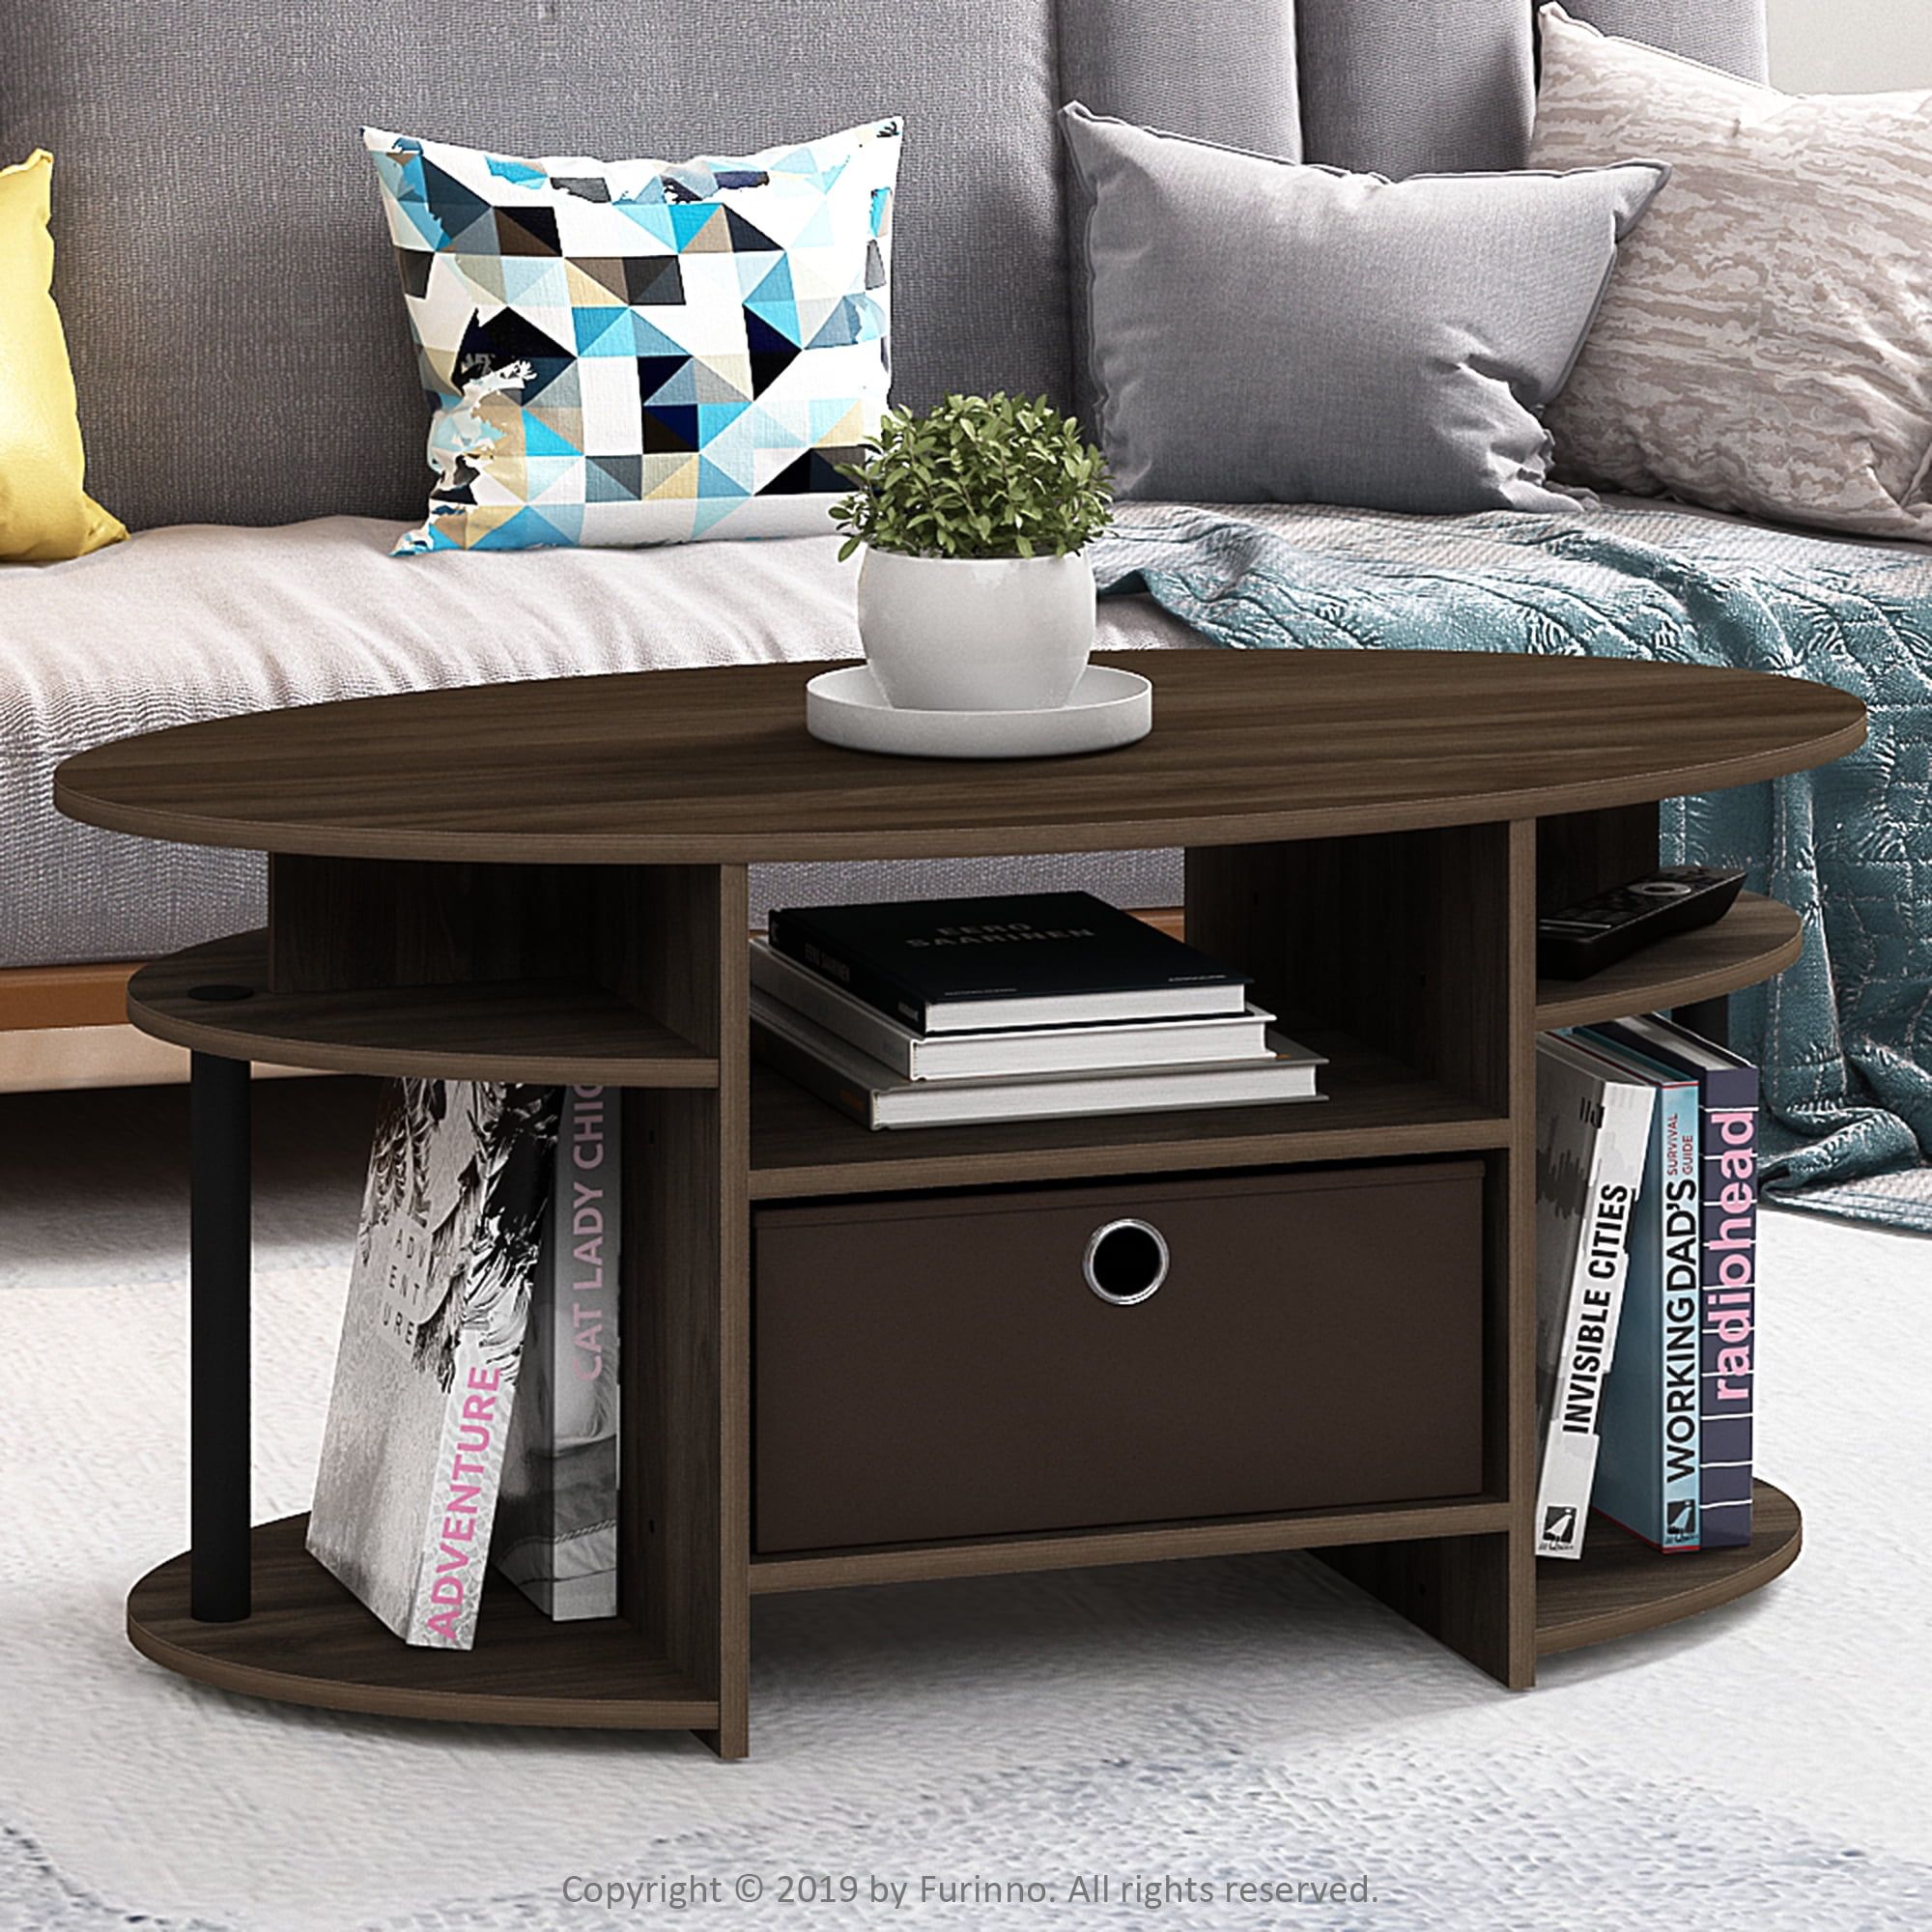 Furinno Jaya Simple Design Oval Coffee Table With Bin, Columbia  Walnut/black/dark Brown – Walmart Pertaining To Simple Design Coffee Tables (View 12 of 15)